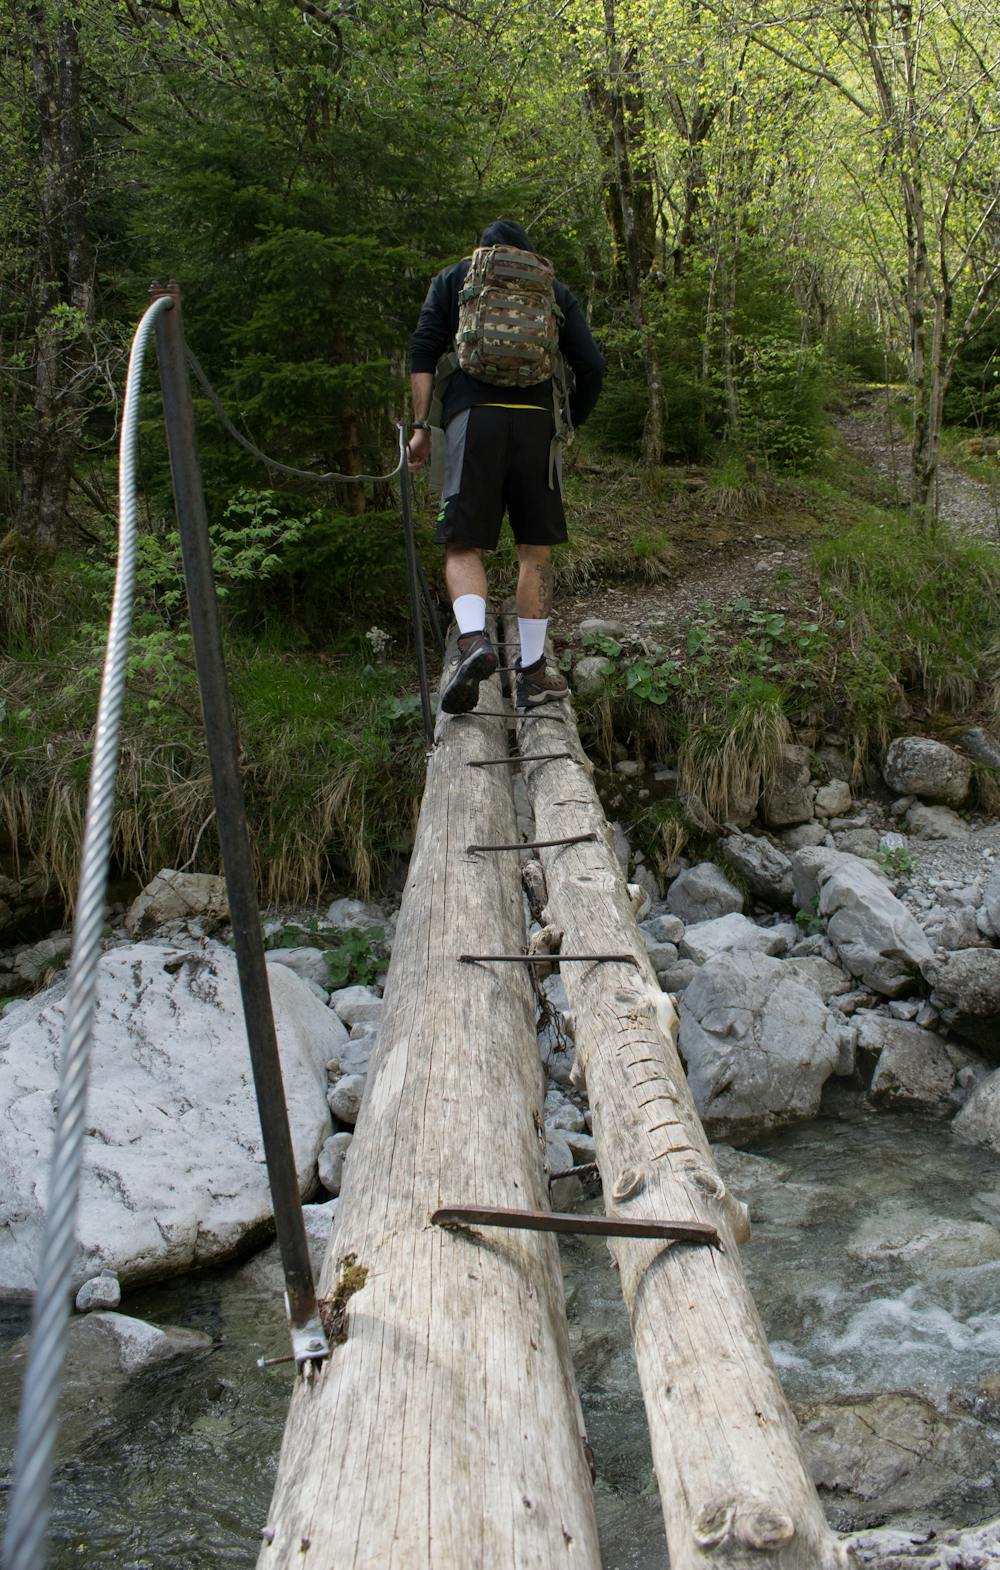 Wood bridge (not so stable :P)